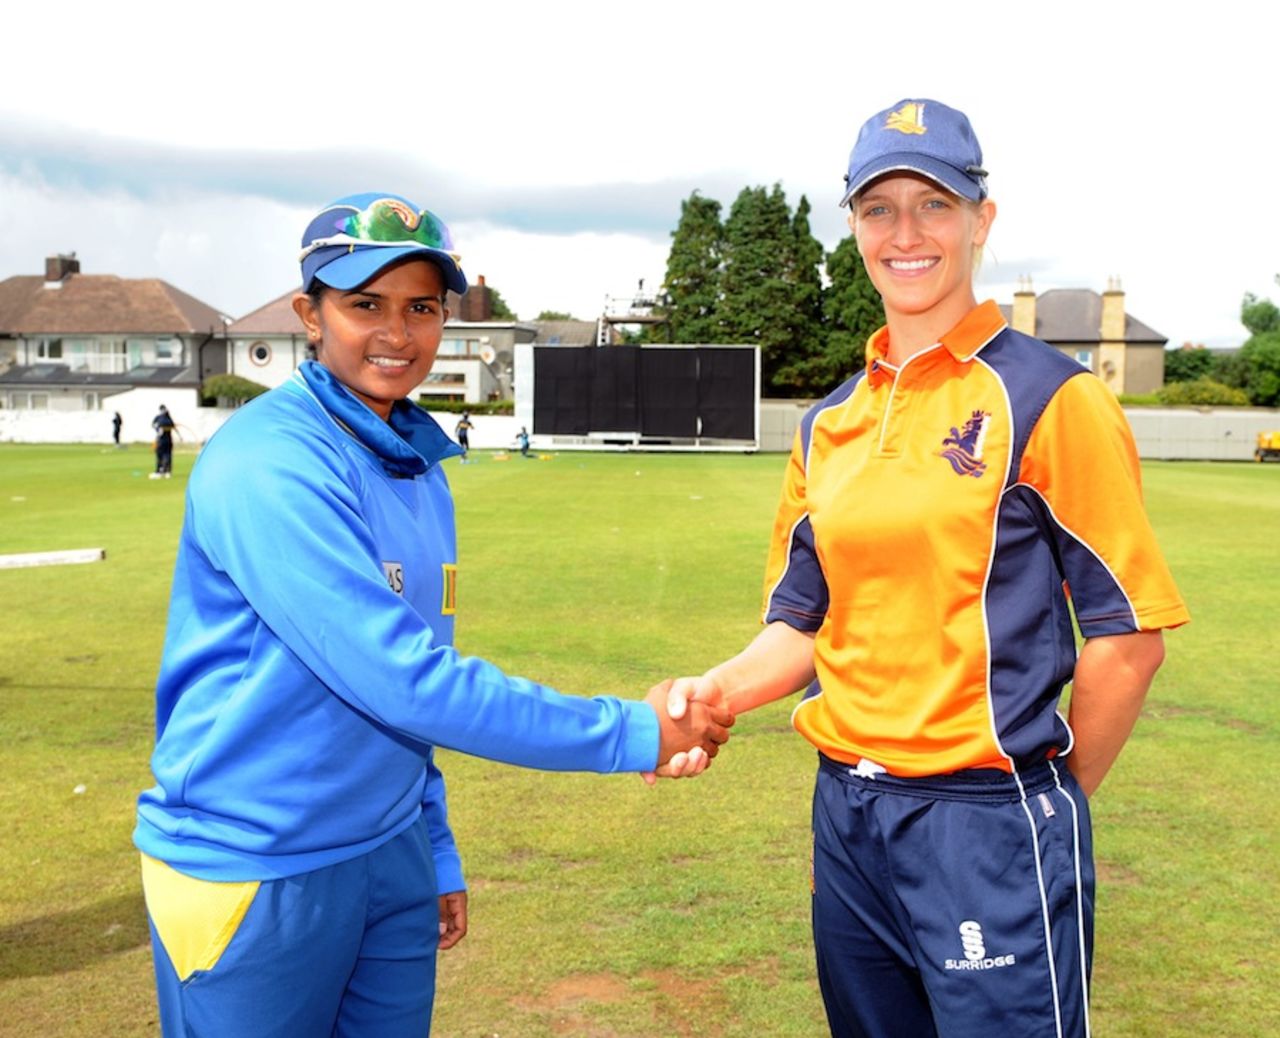 Captains Shashikala Siriwardene and Denise Hannema during the toss, Netherlands Women v Sri Lanka Women, ICC Women's World Twenty20 Qualifiers, 2nd semi-final, Dublin, July 29, 2013